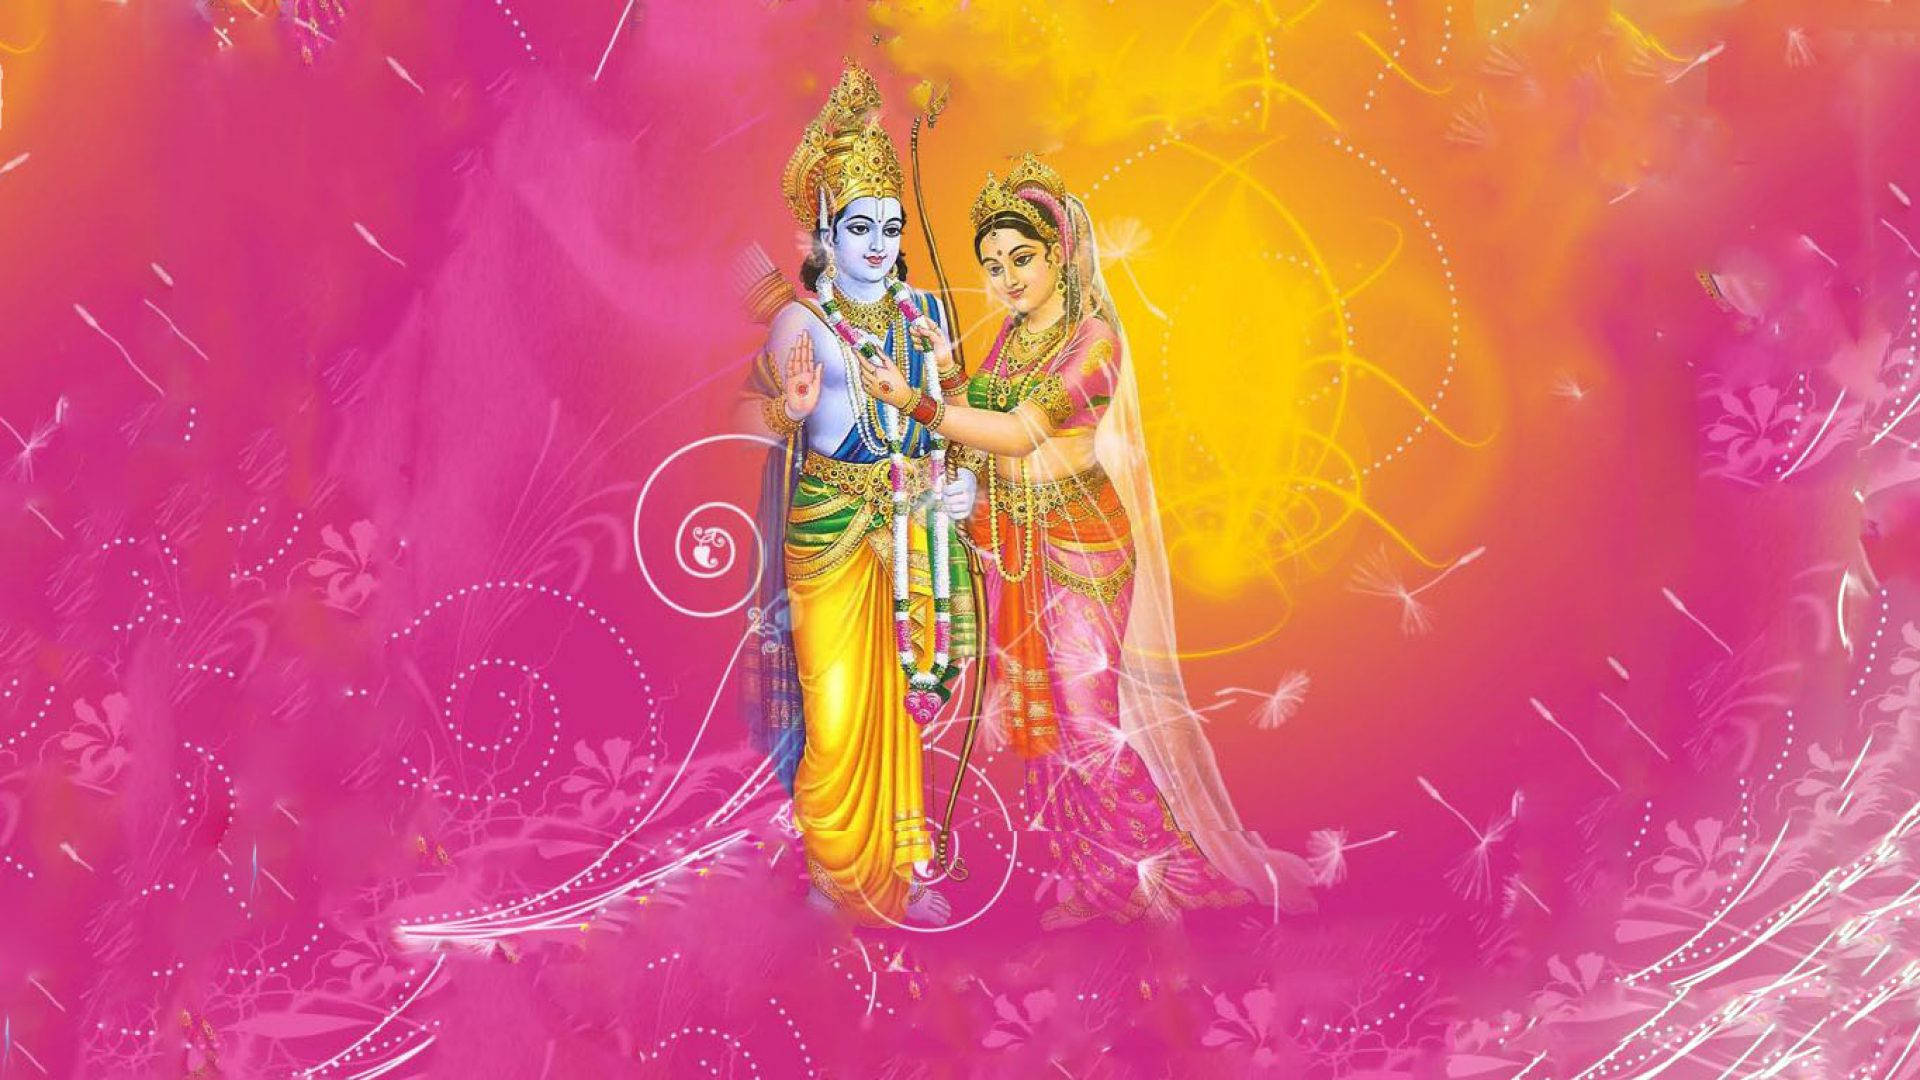 Caption: Enchanting Illustration Of Ram And Sita